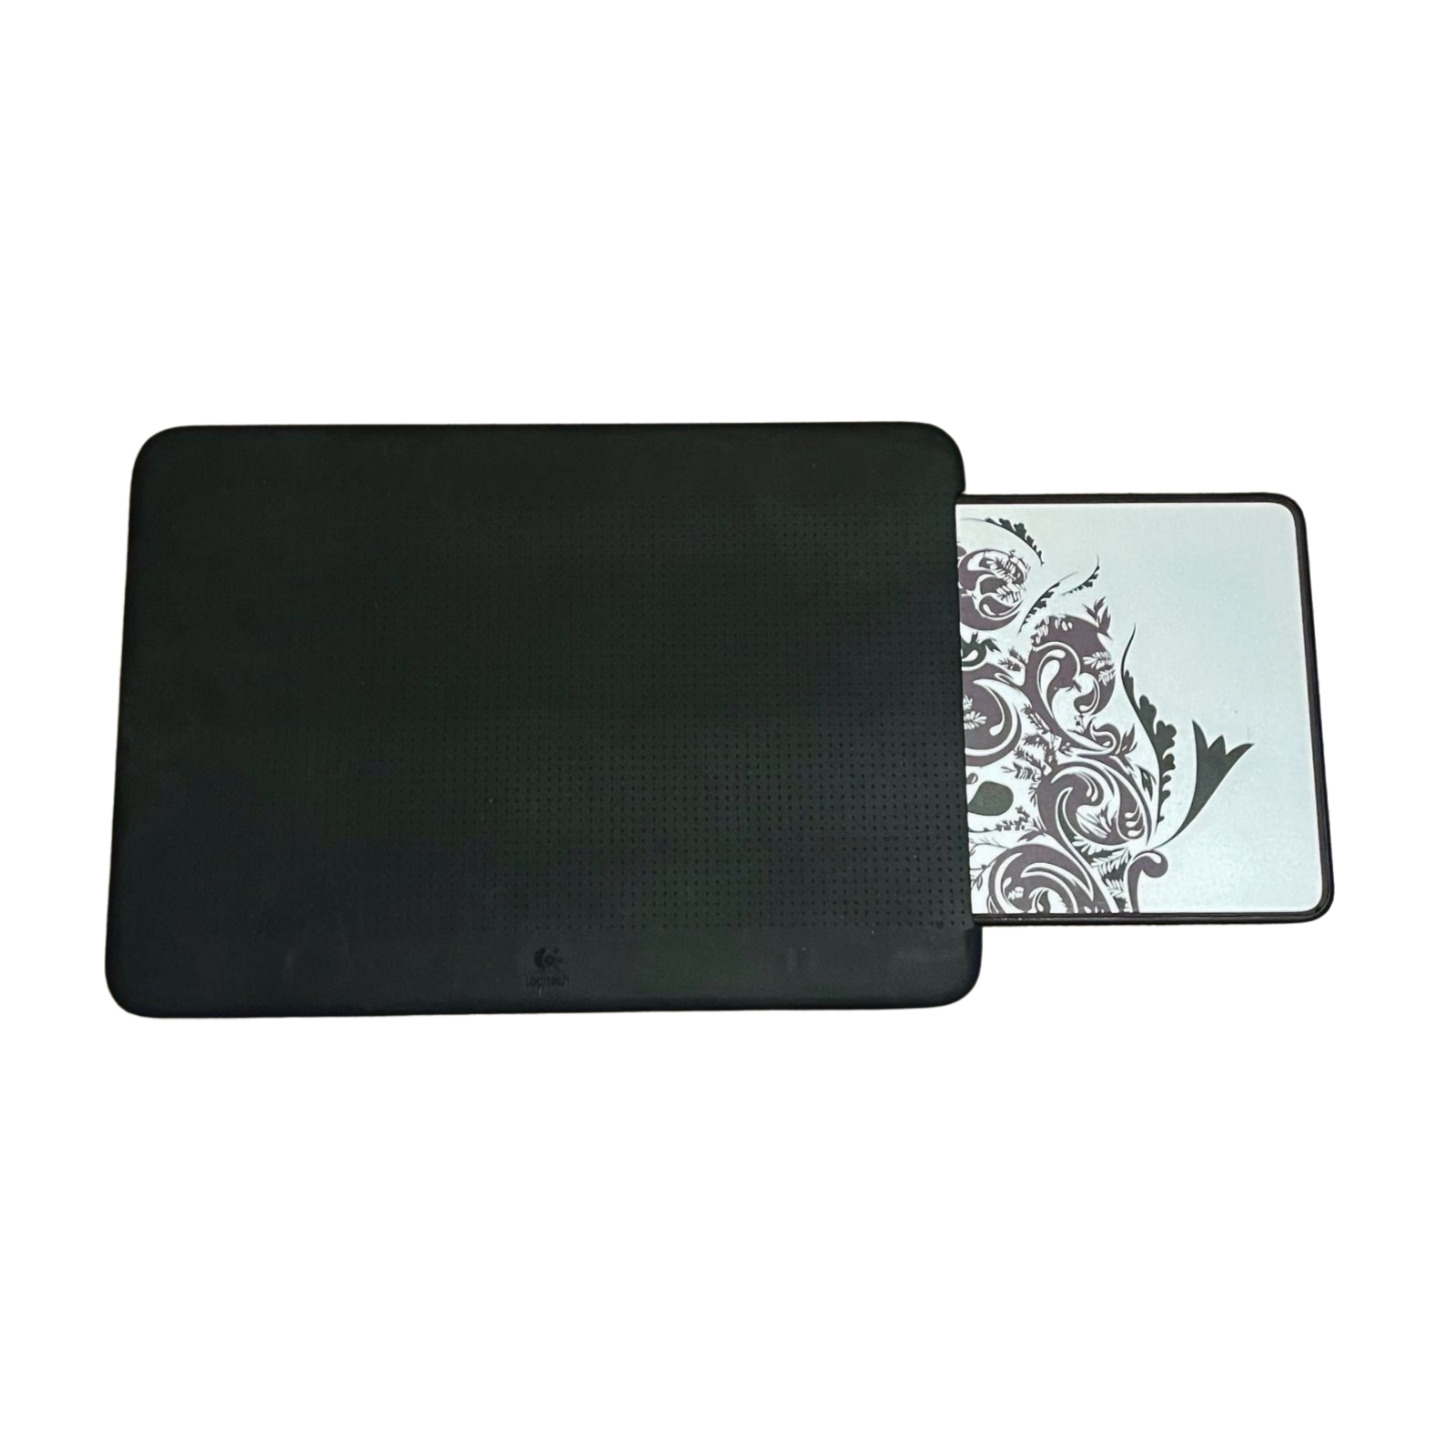 Logitech Portable Lapdesk N315 Purple Black Design Extending Mouse Tray